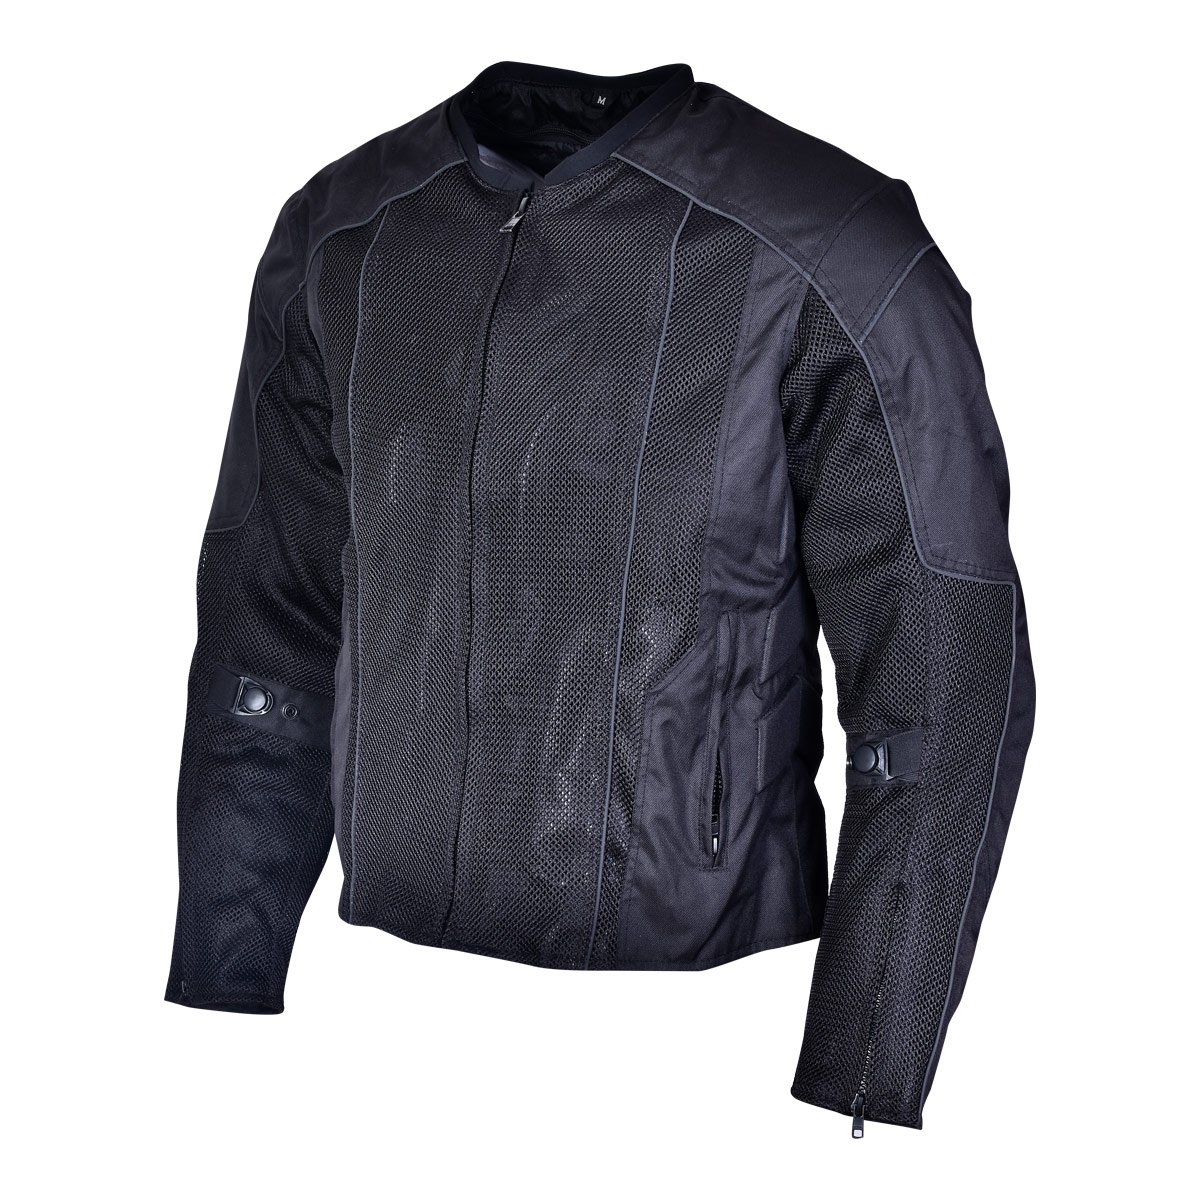 3-Season Mesh/Textile CE Armor Jacket VL1627B - Open Road Leather ...